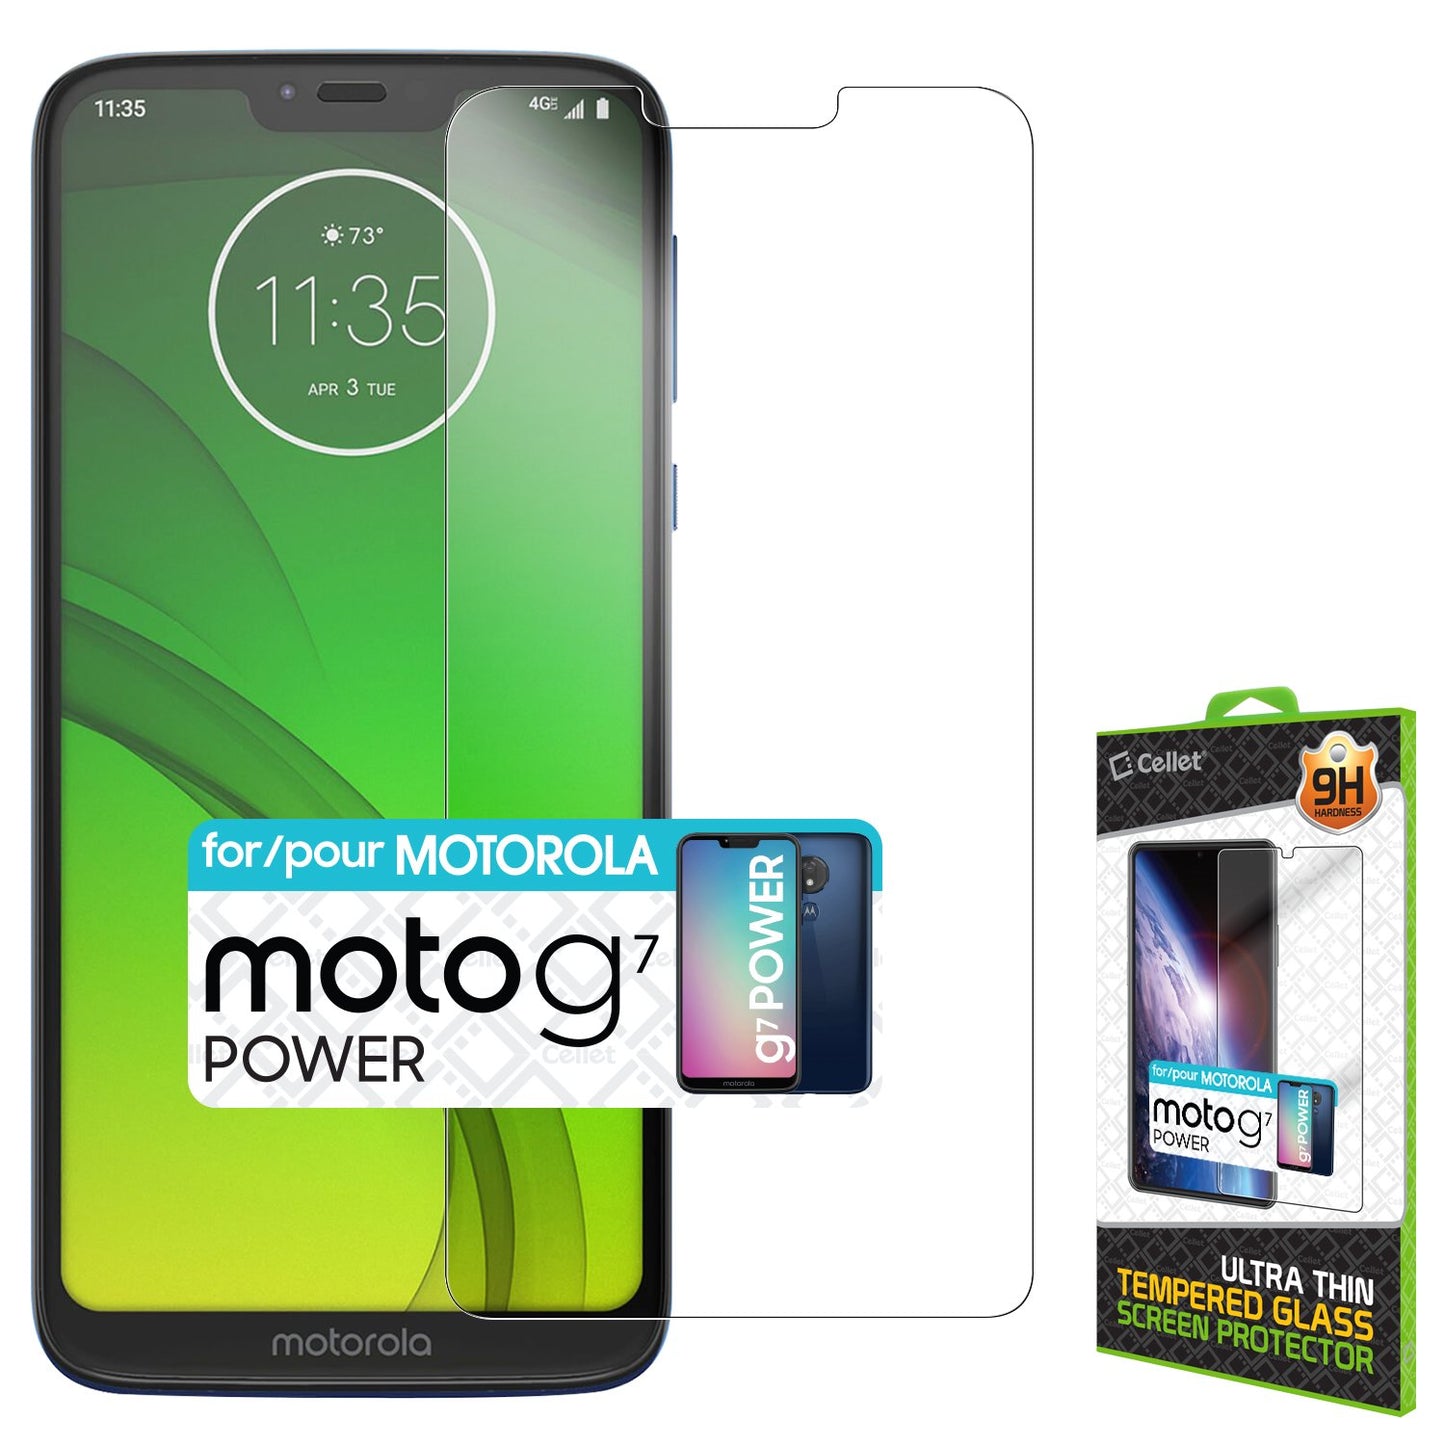 SGMOTG7PWR - Motorola Moto G7 Power, Cellet 0.3mm Premium Tempered Glass Screen Protector for  Motorola Moto G7 Power (9H Hardness)